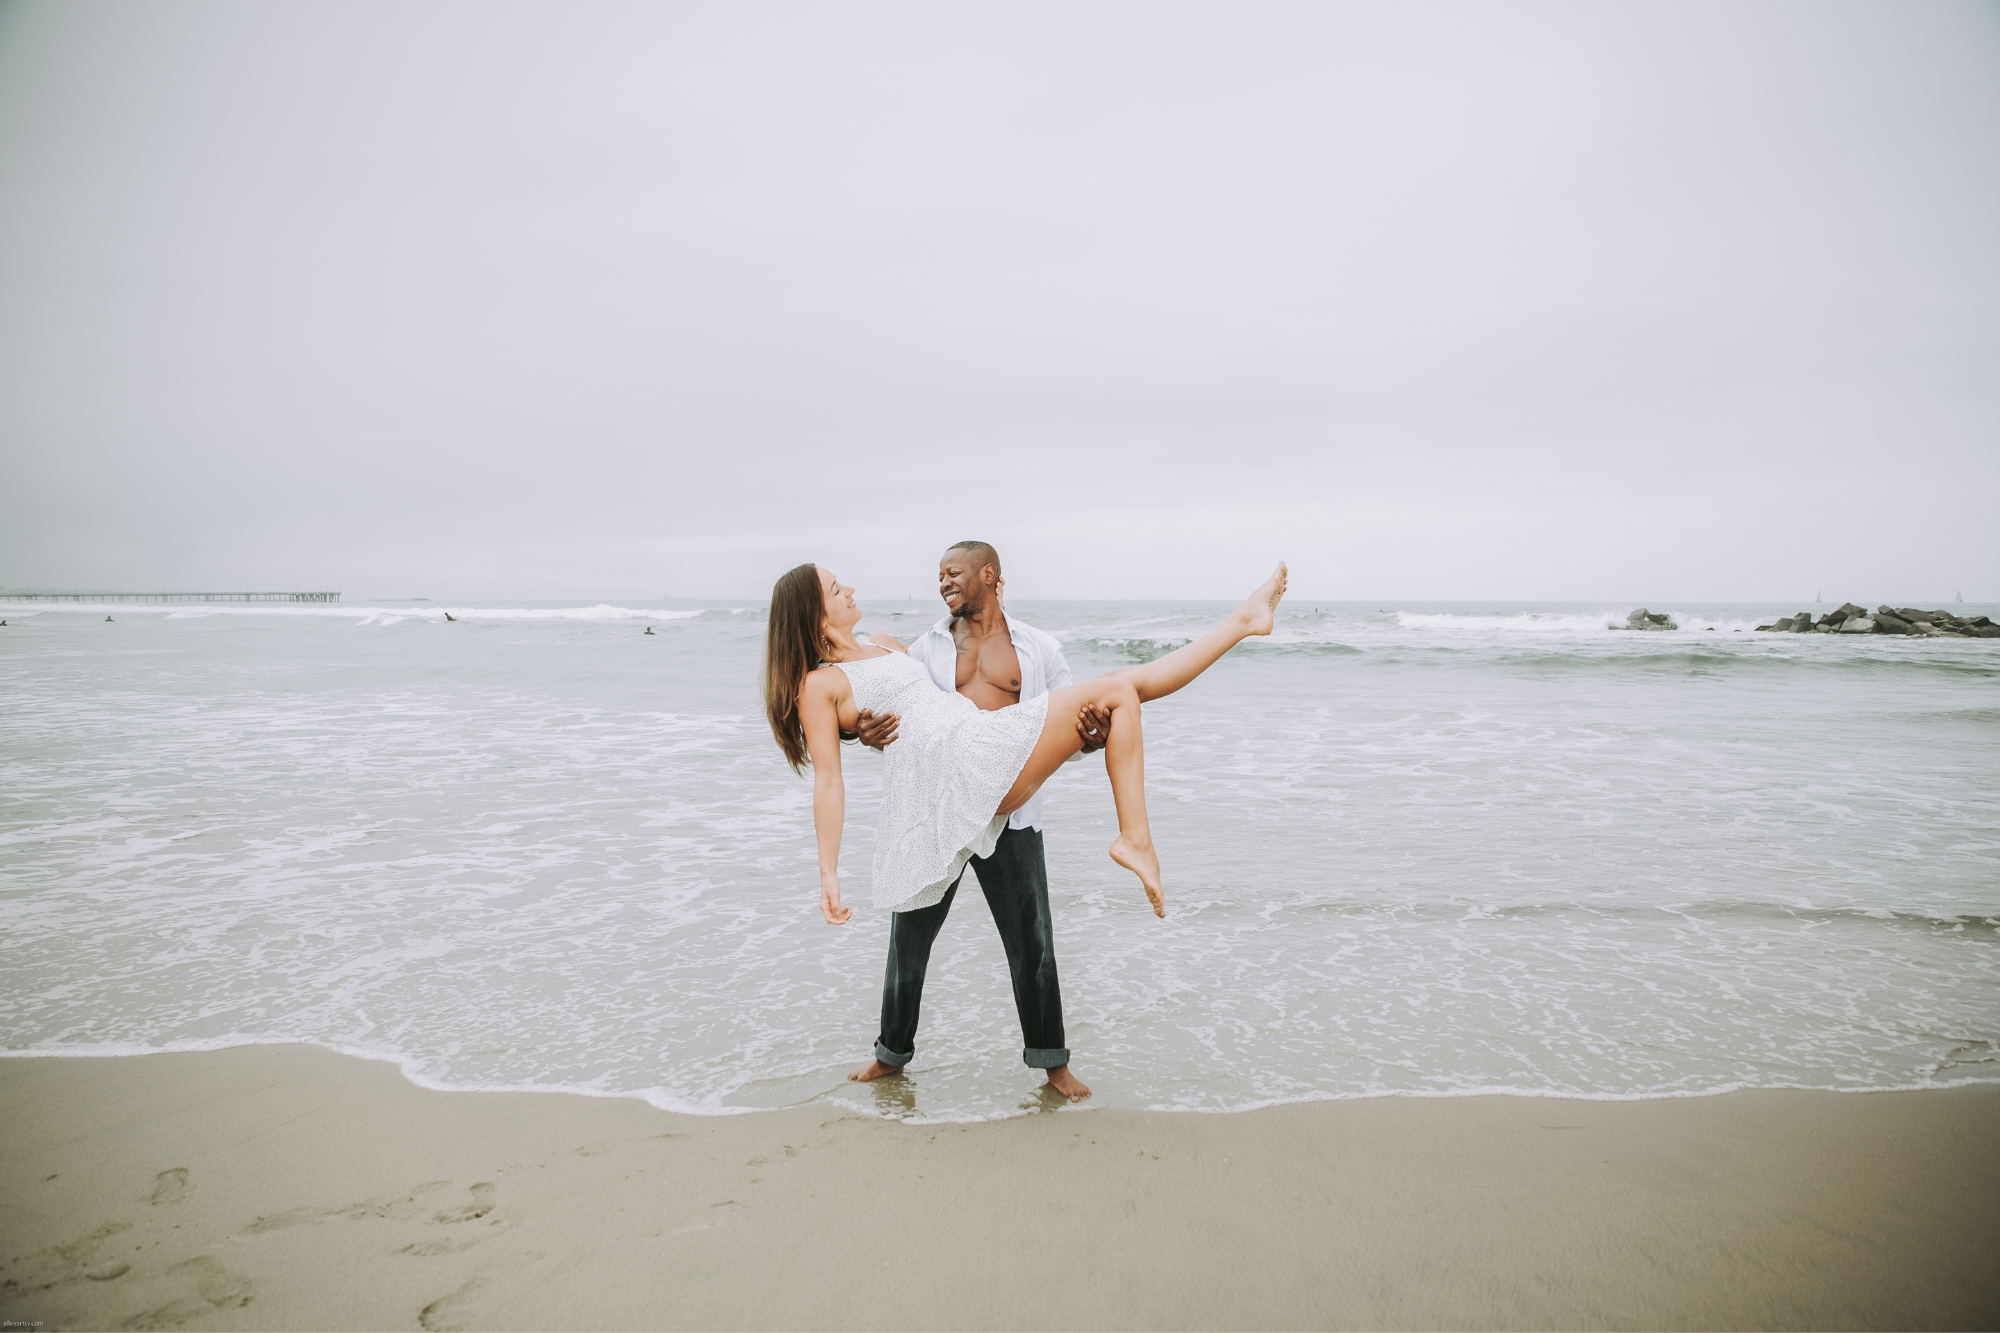 Couple's beach photoshoot | Couples beach photography, Beach photo session, Pre  wedding photoshoot beach